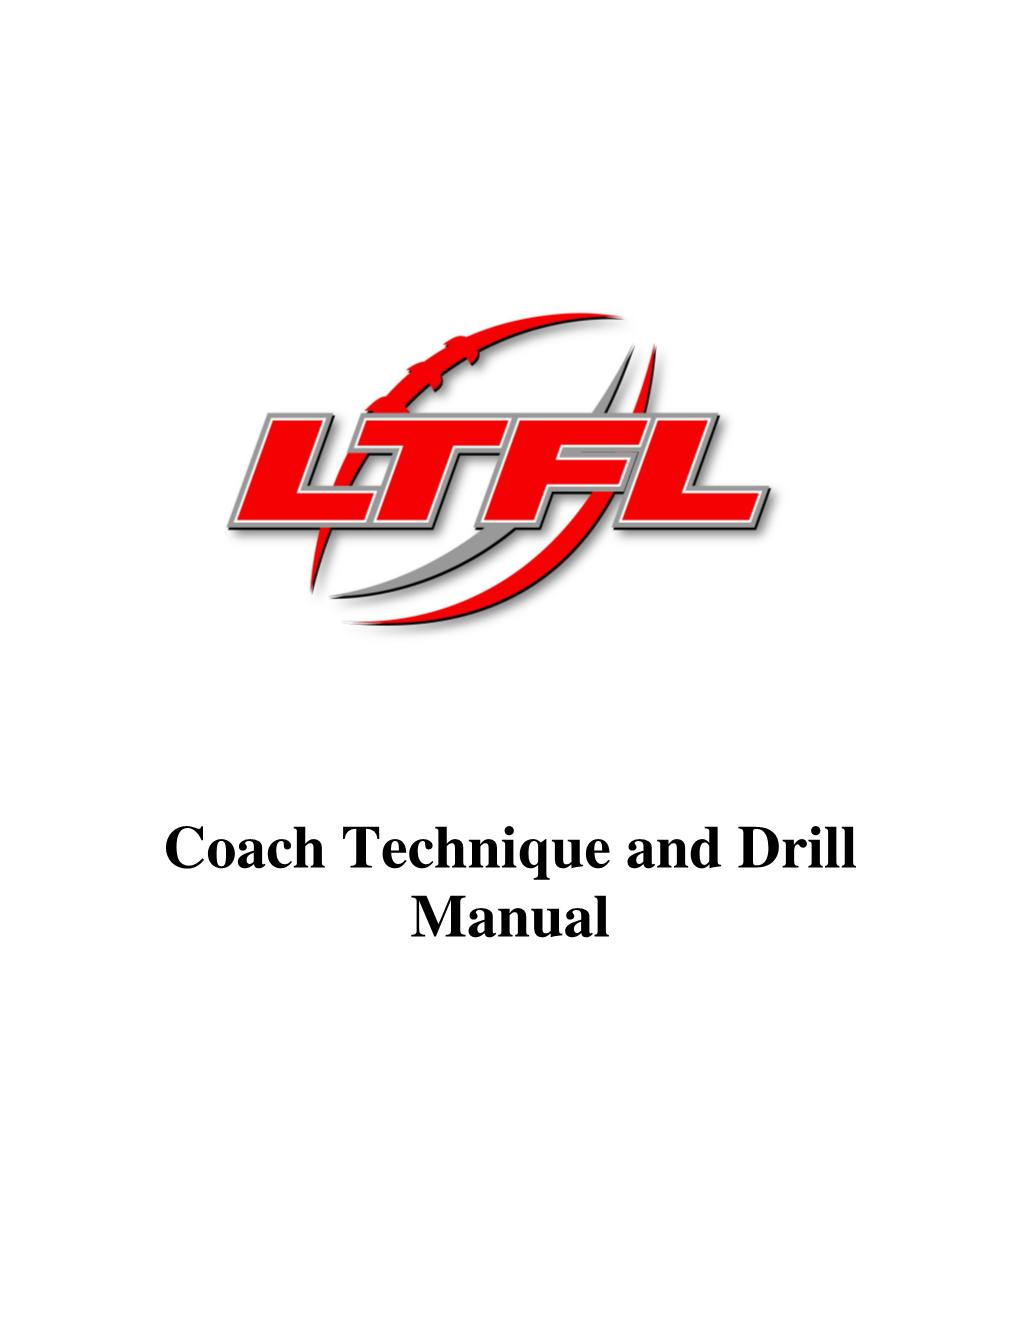 Coach Technique and Drill Manual